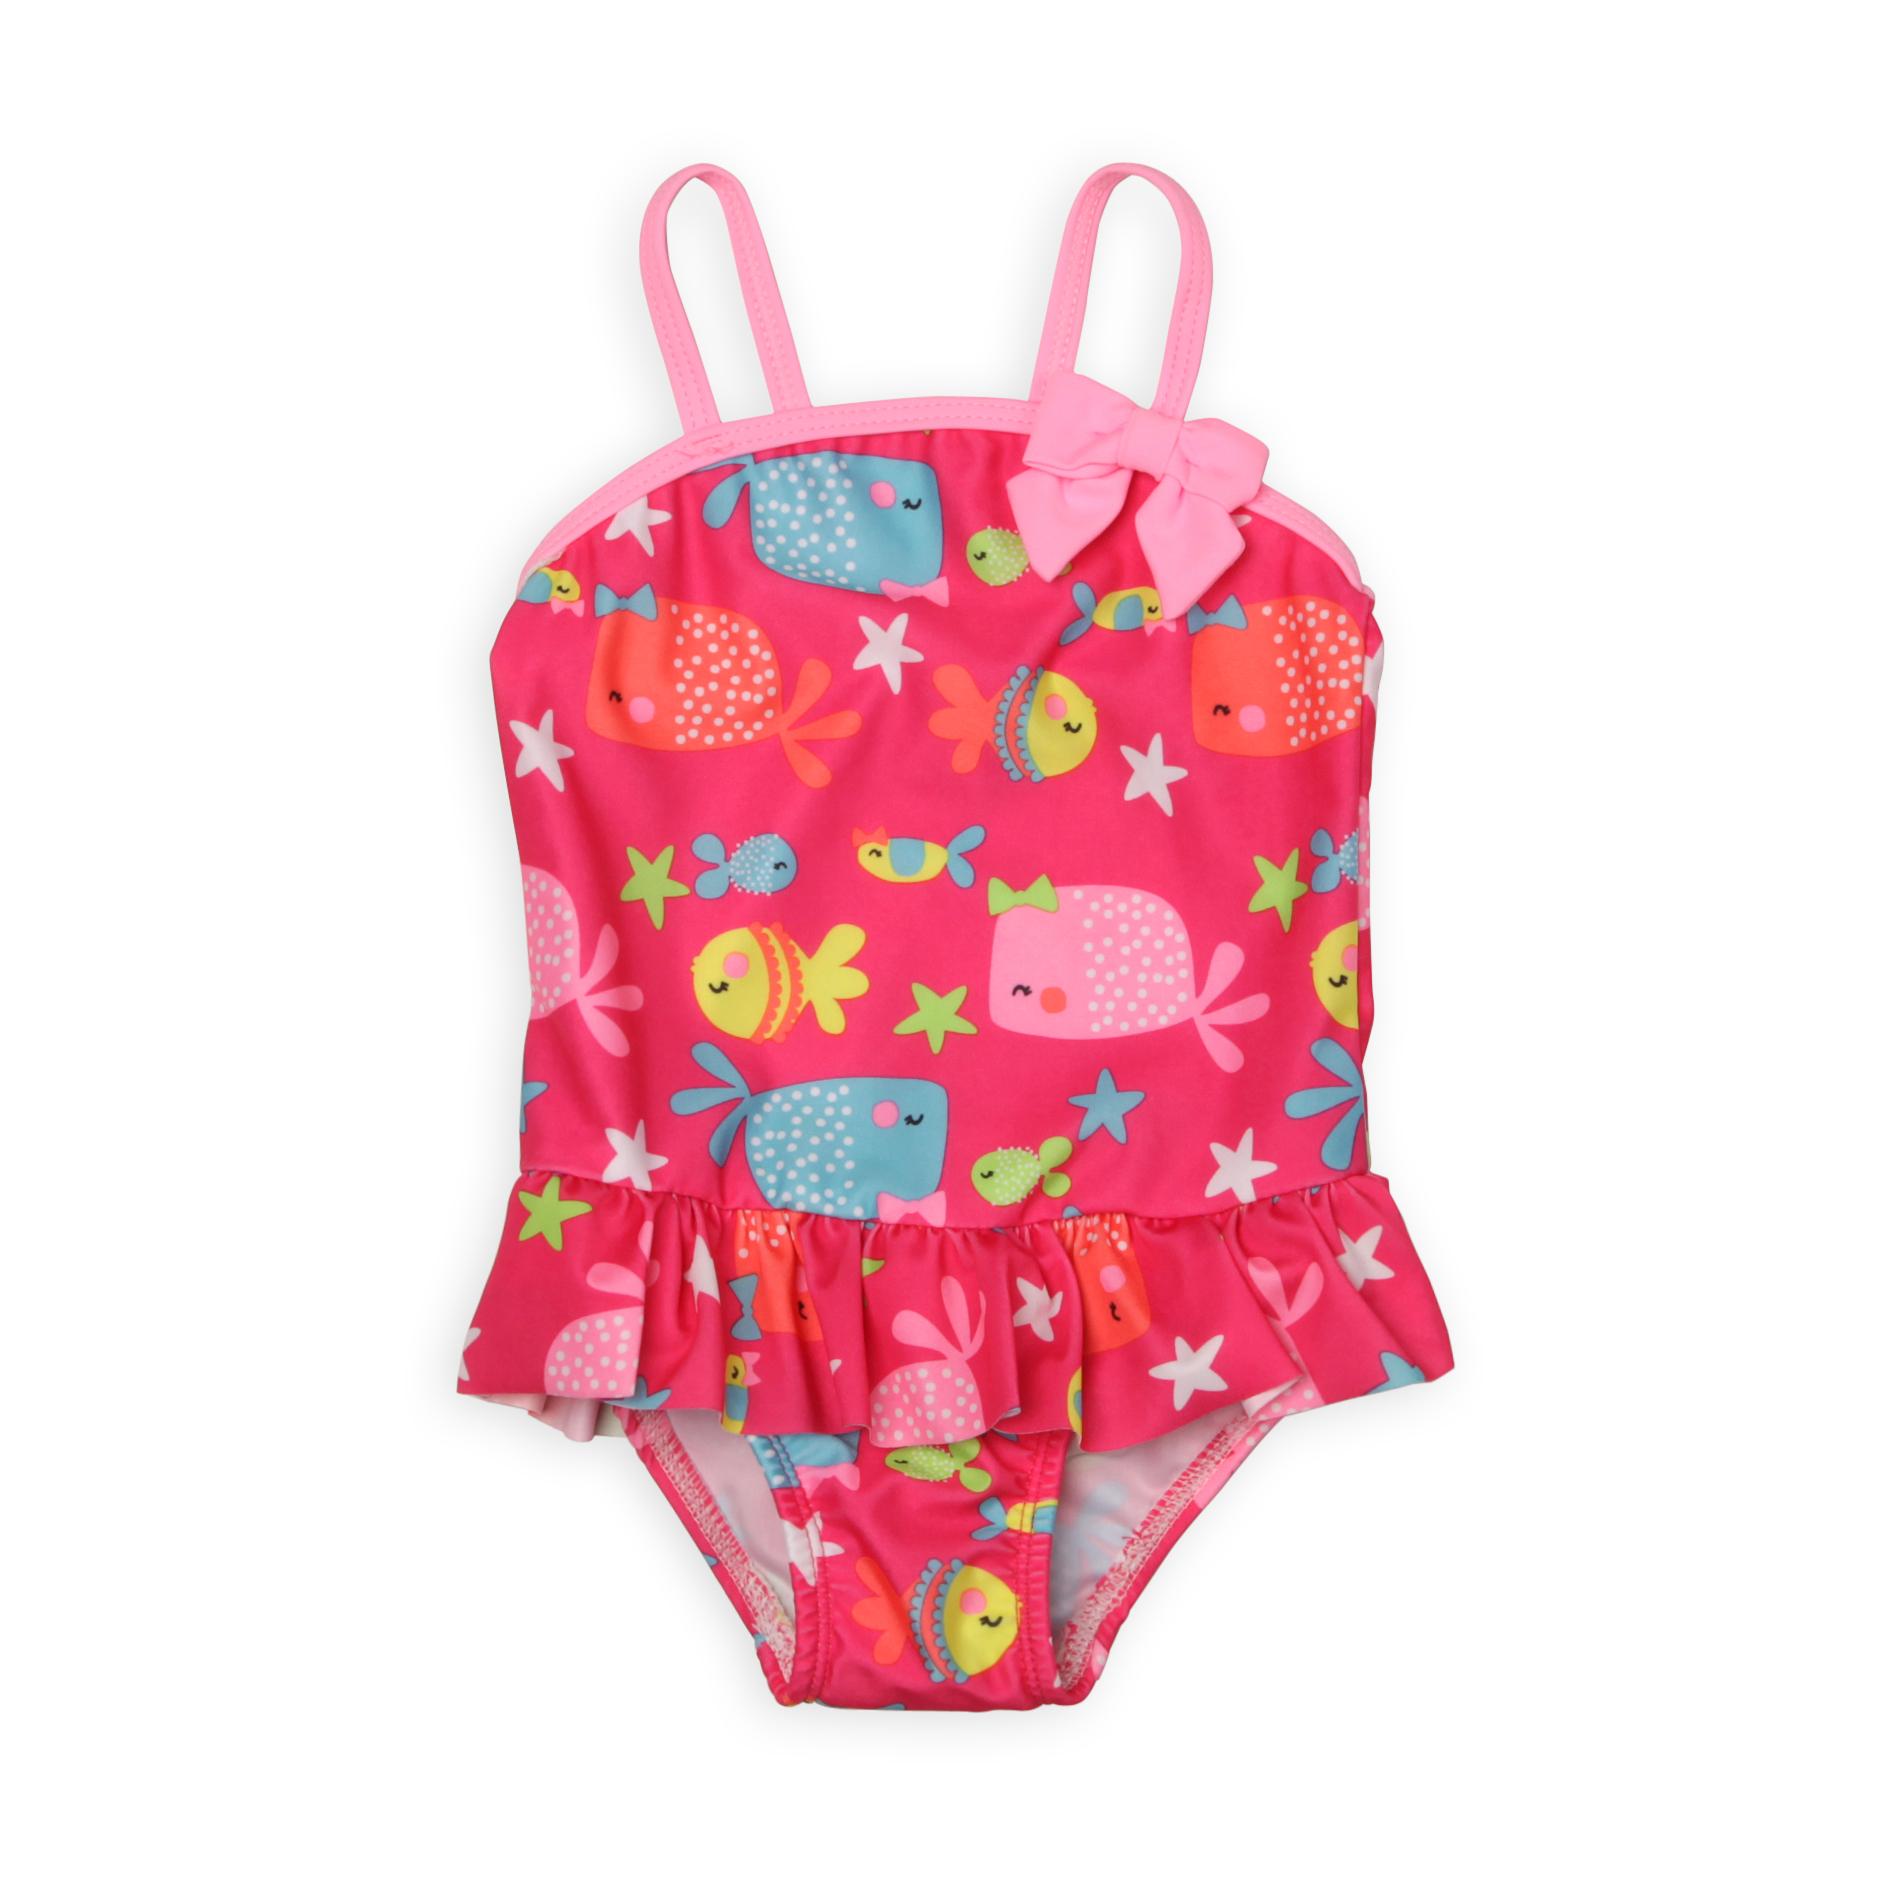 Joe Boxer Infant & Toddler Girl's Tutu Swimsuit - Fish